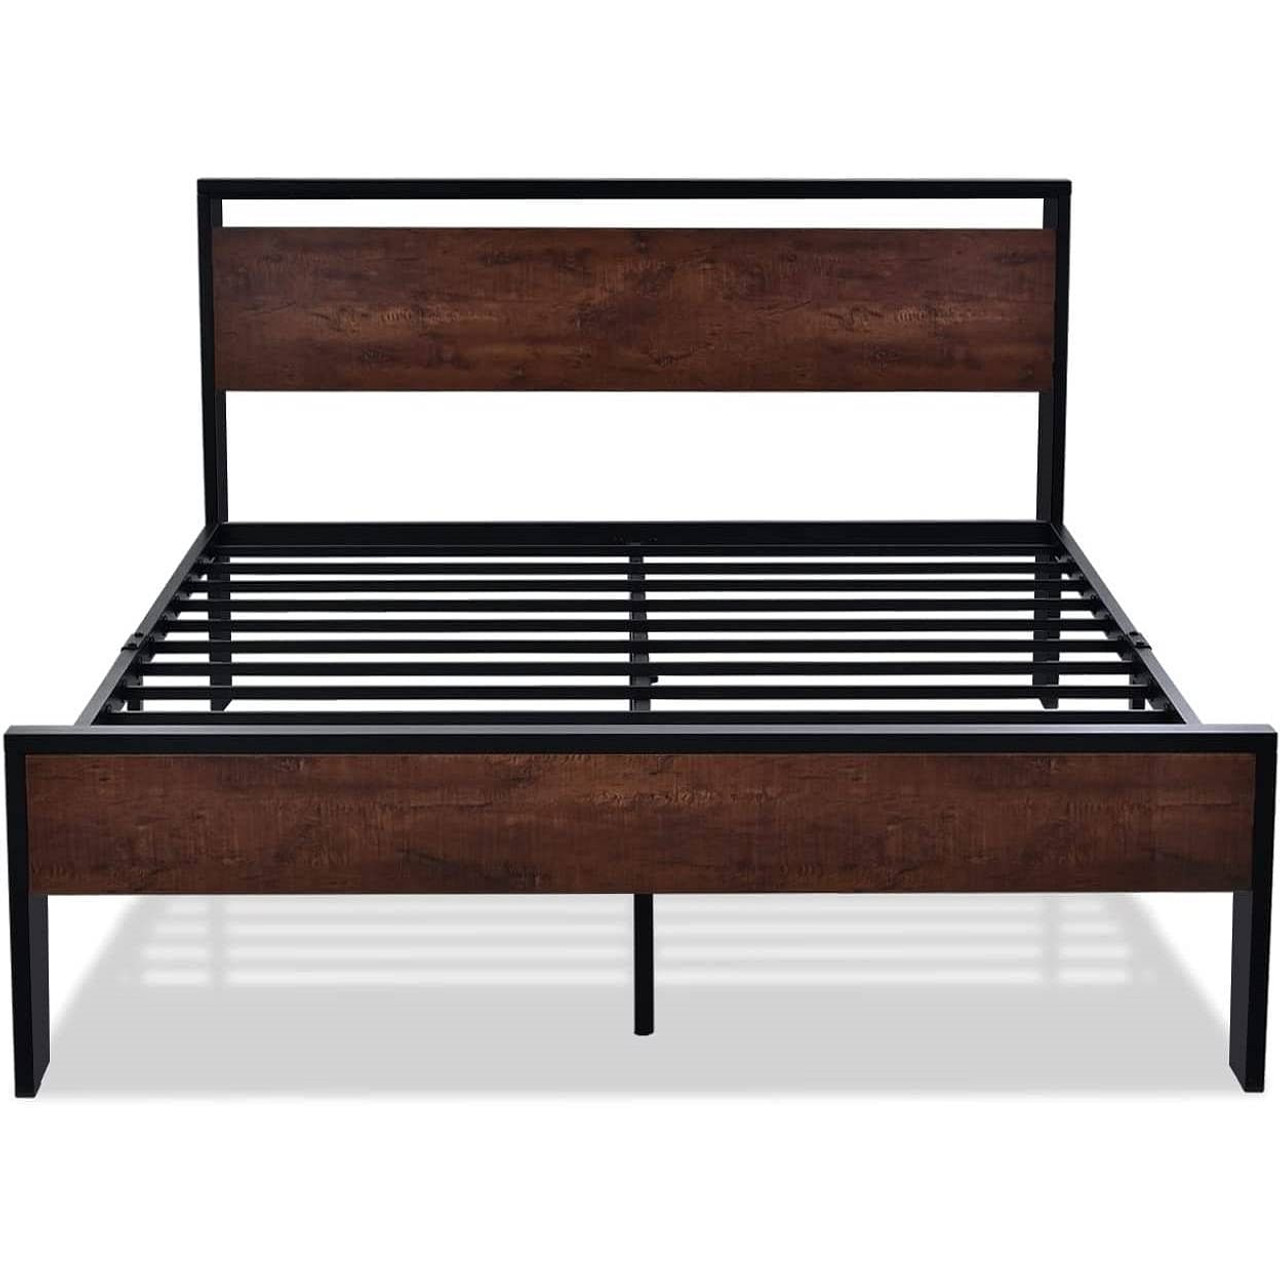 Full Metal Platform Bed Frame with Mahogany Wood Panel Headboard Footboard